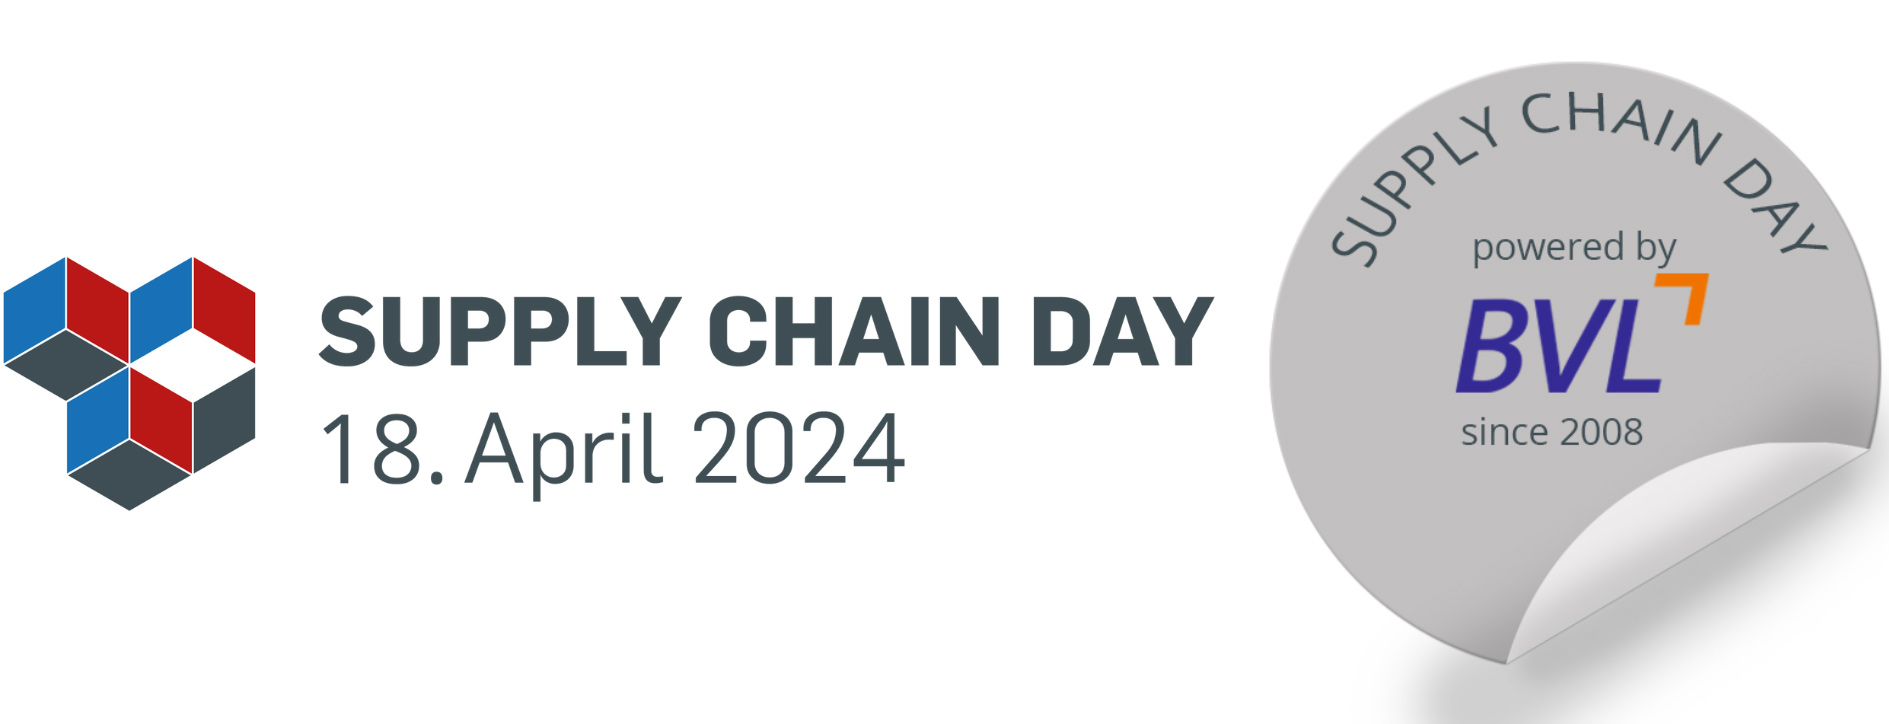 Supply Chain Day 2025